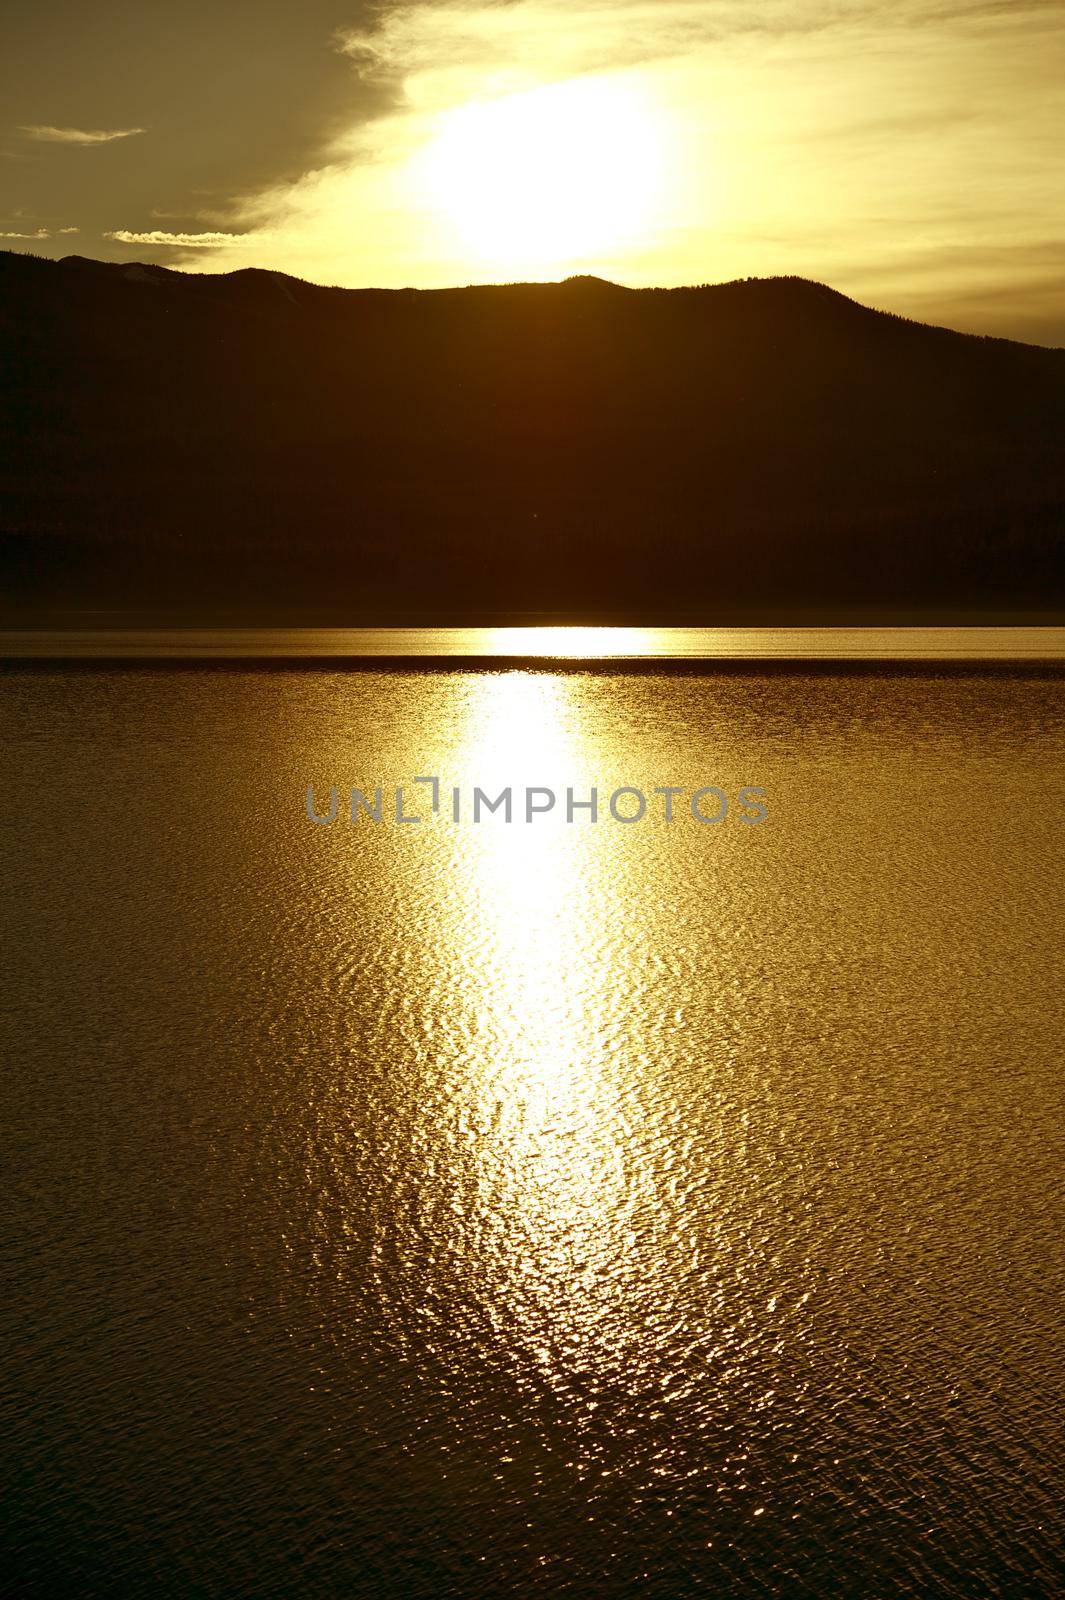 Lake Sunset - Outdoor Theme. McDonalds Lake, Montana, USA. Vertical Lake Sunset Photo. Nature Photo Collection by welcomia